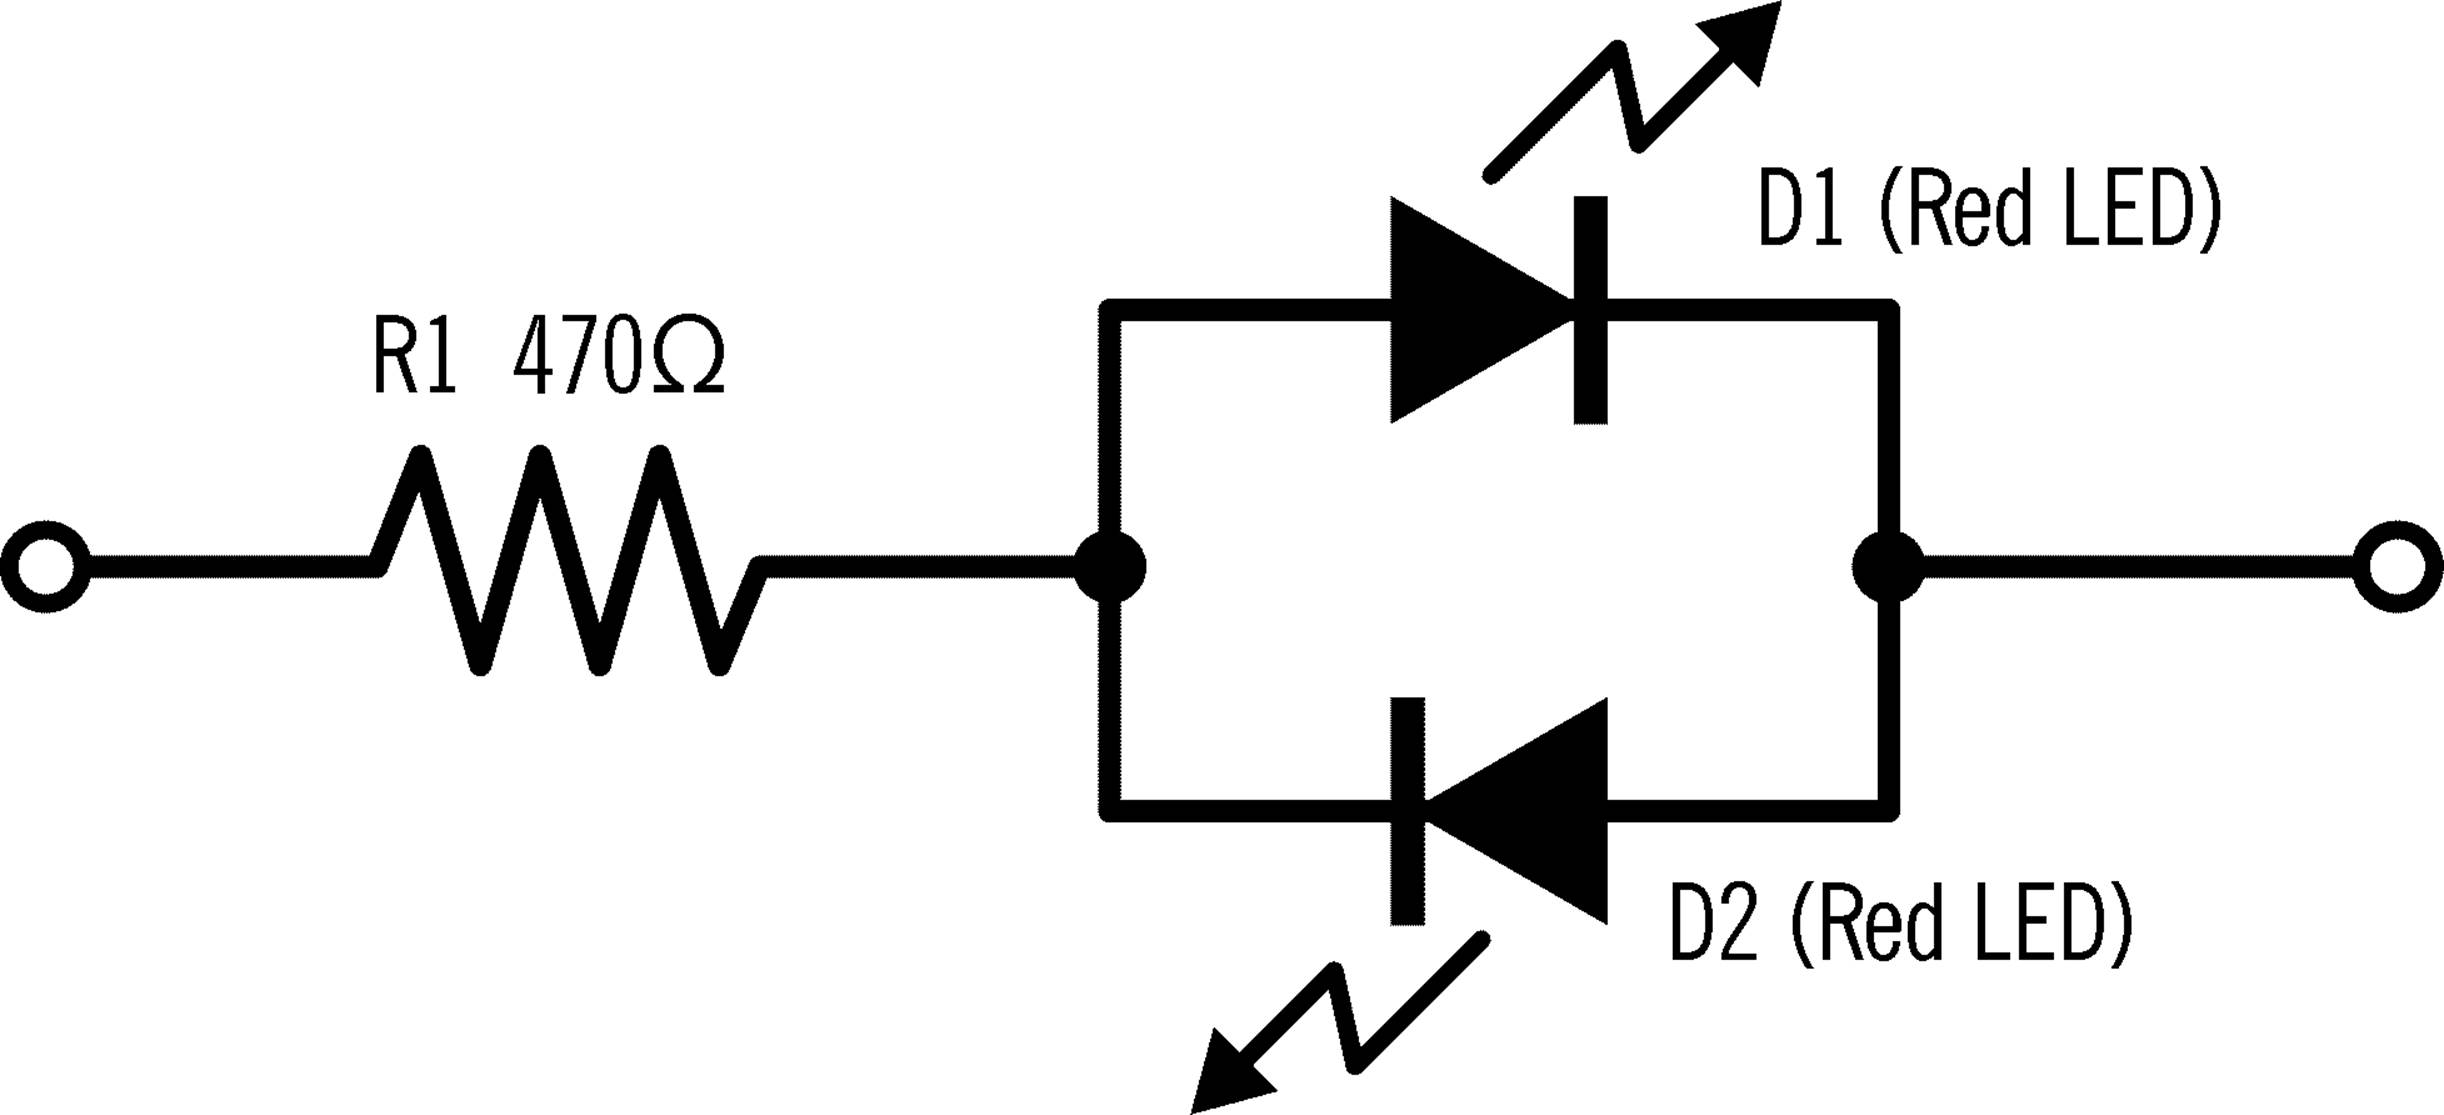 Current flow indicator schematic.